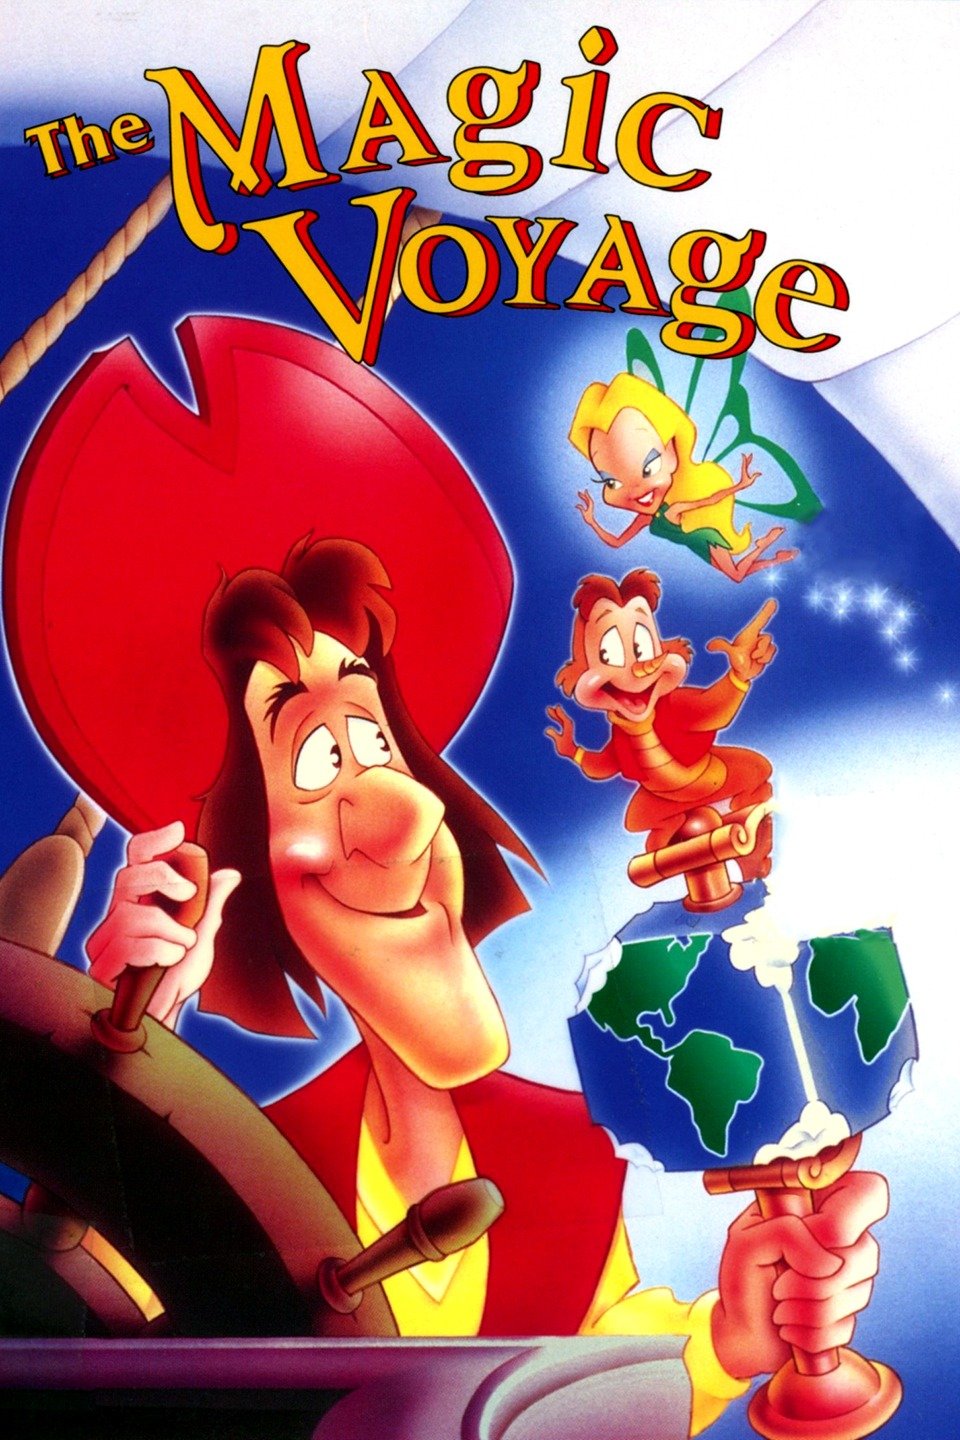 the magic voyage awful movies wiki